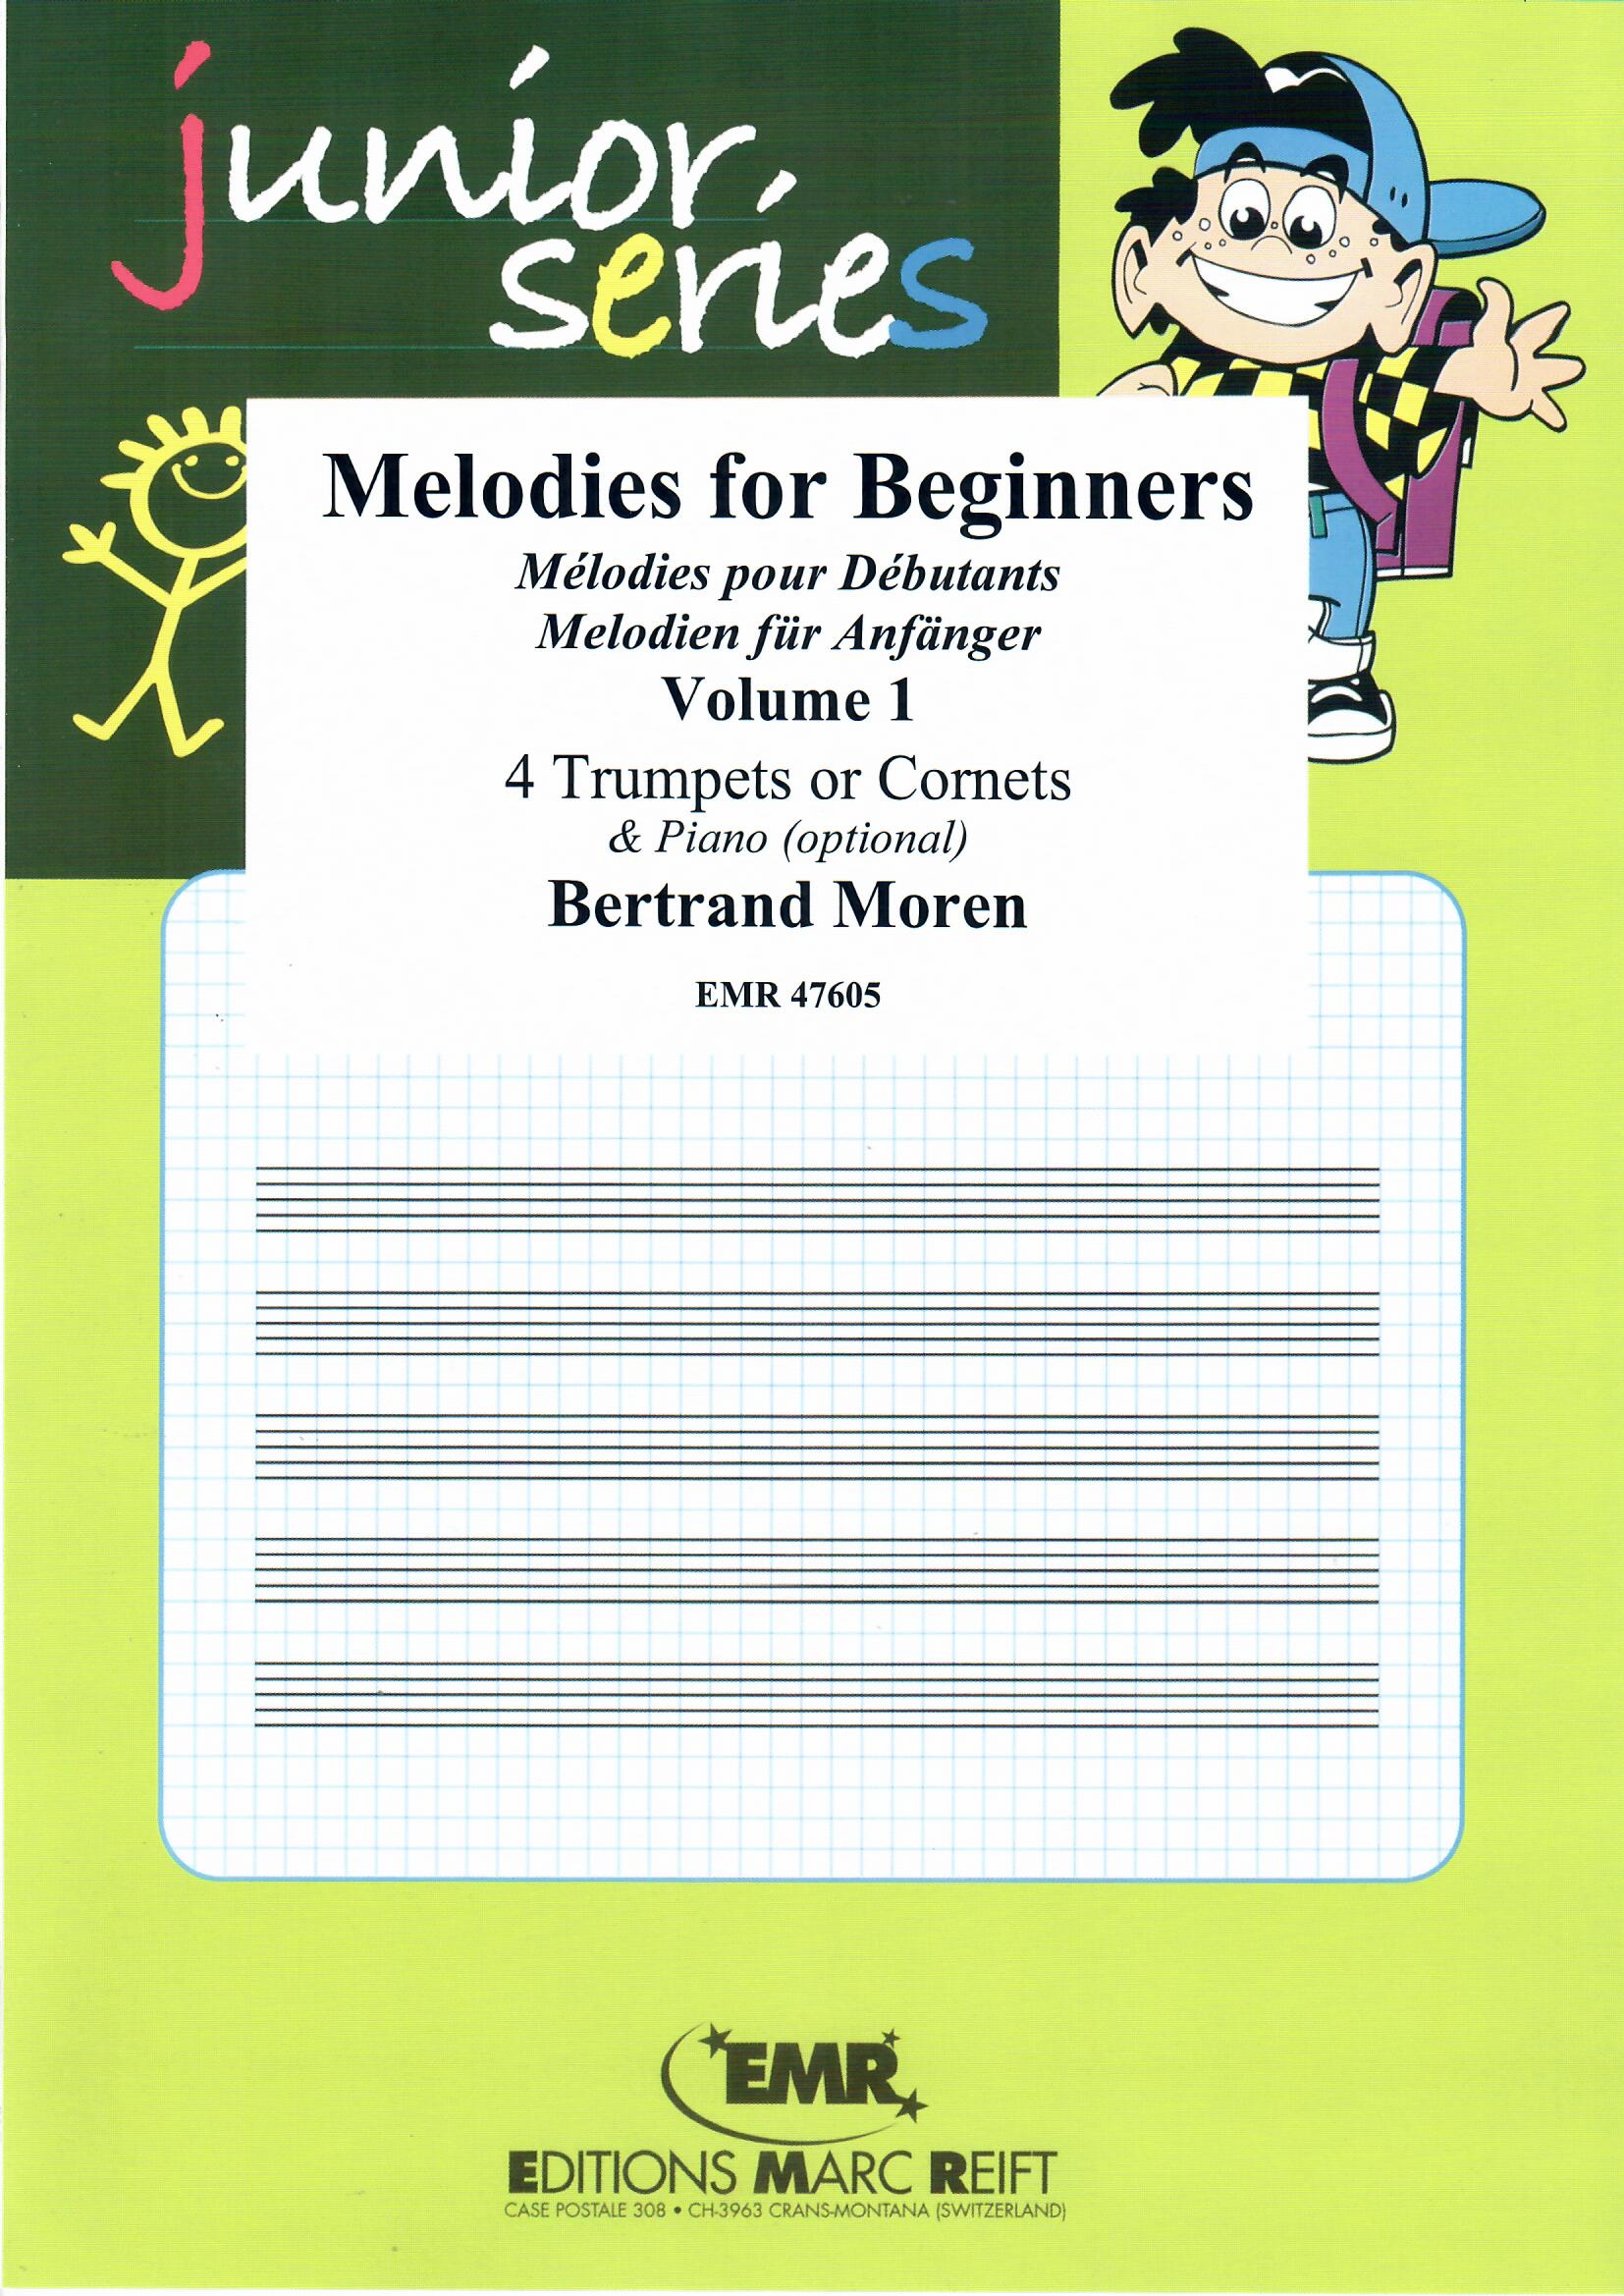 MELODIES FOR BEGINNERS VOLUME 1 - Cornet Quartet